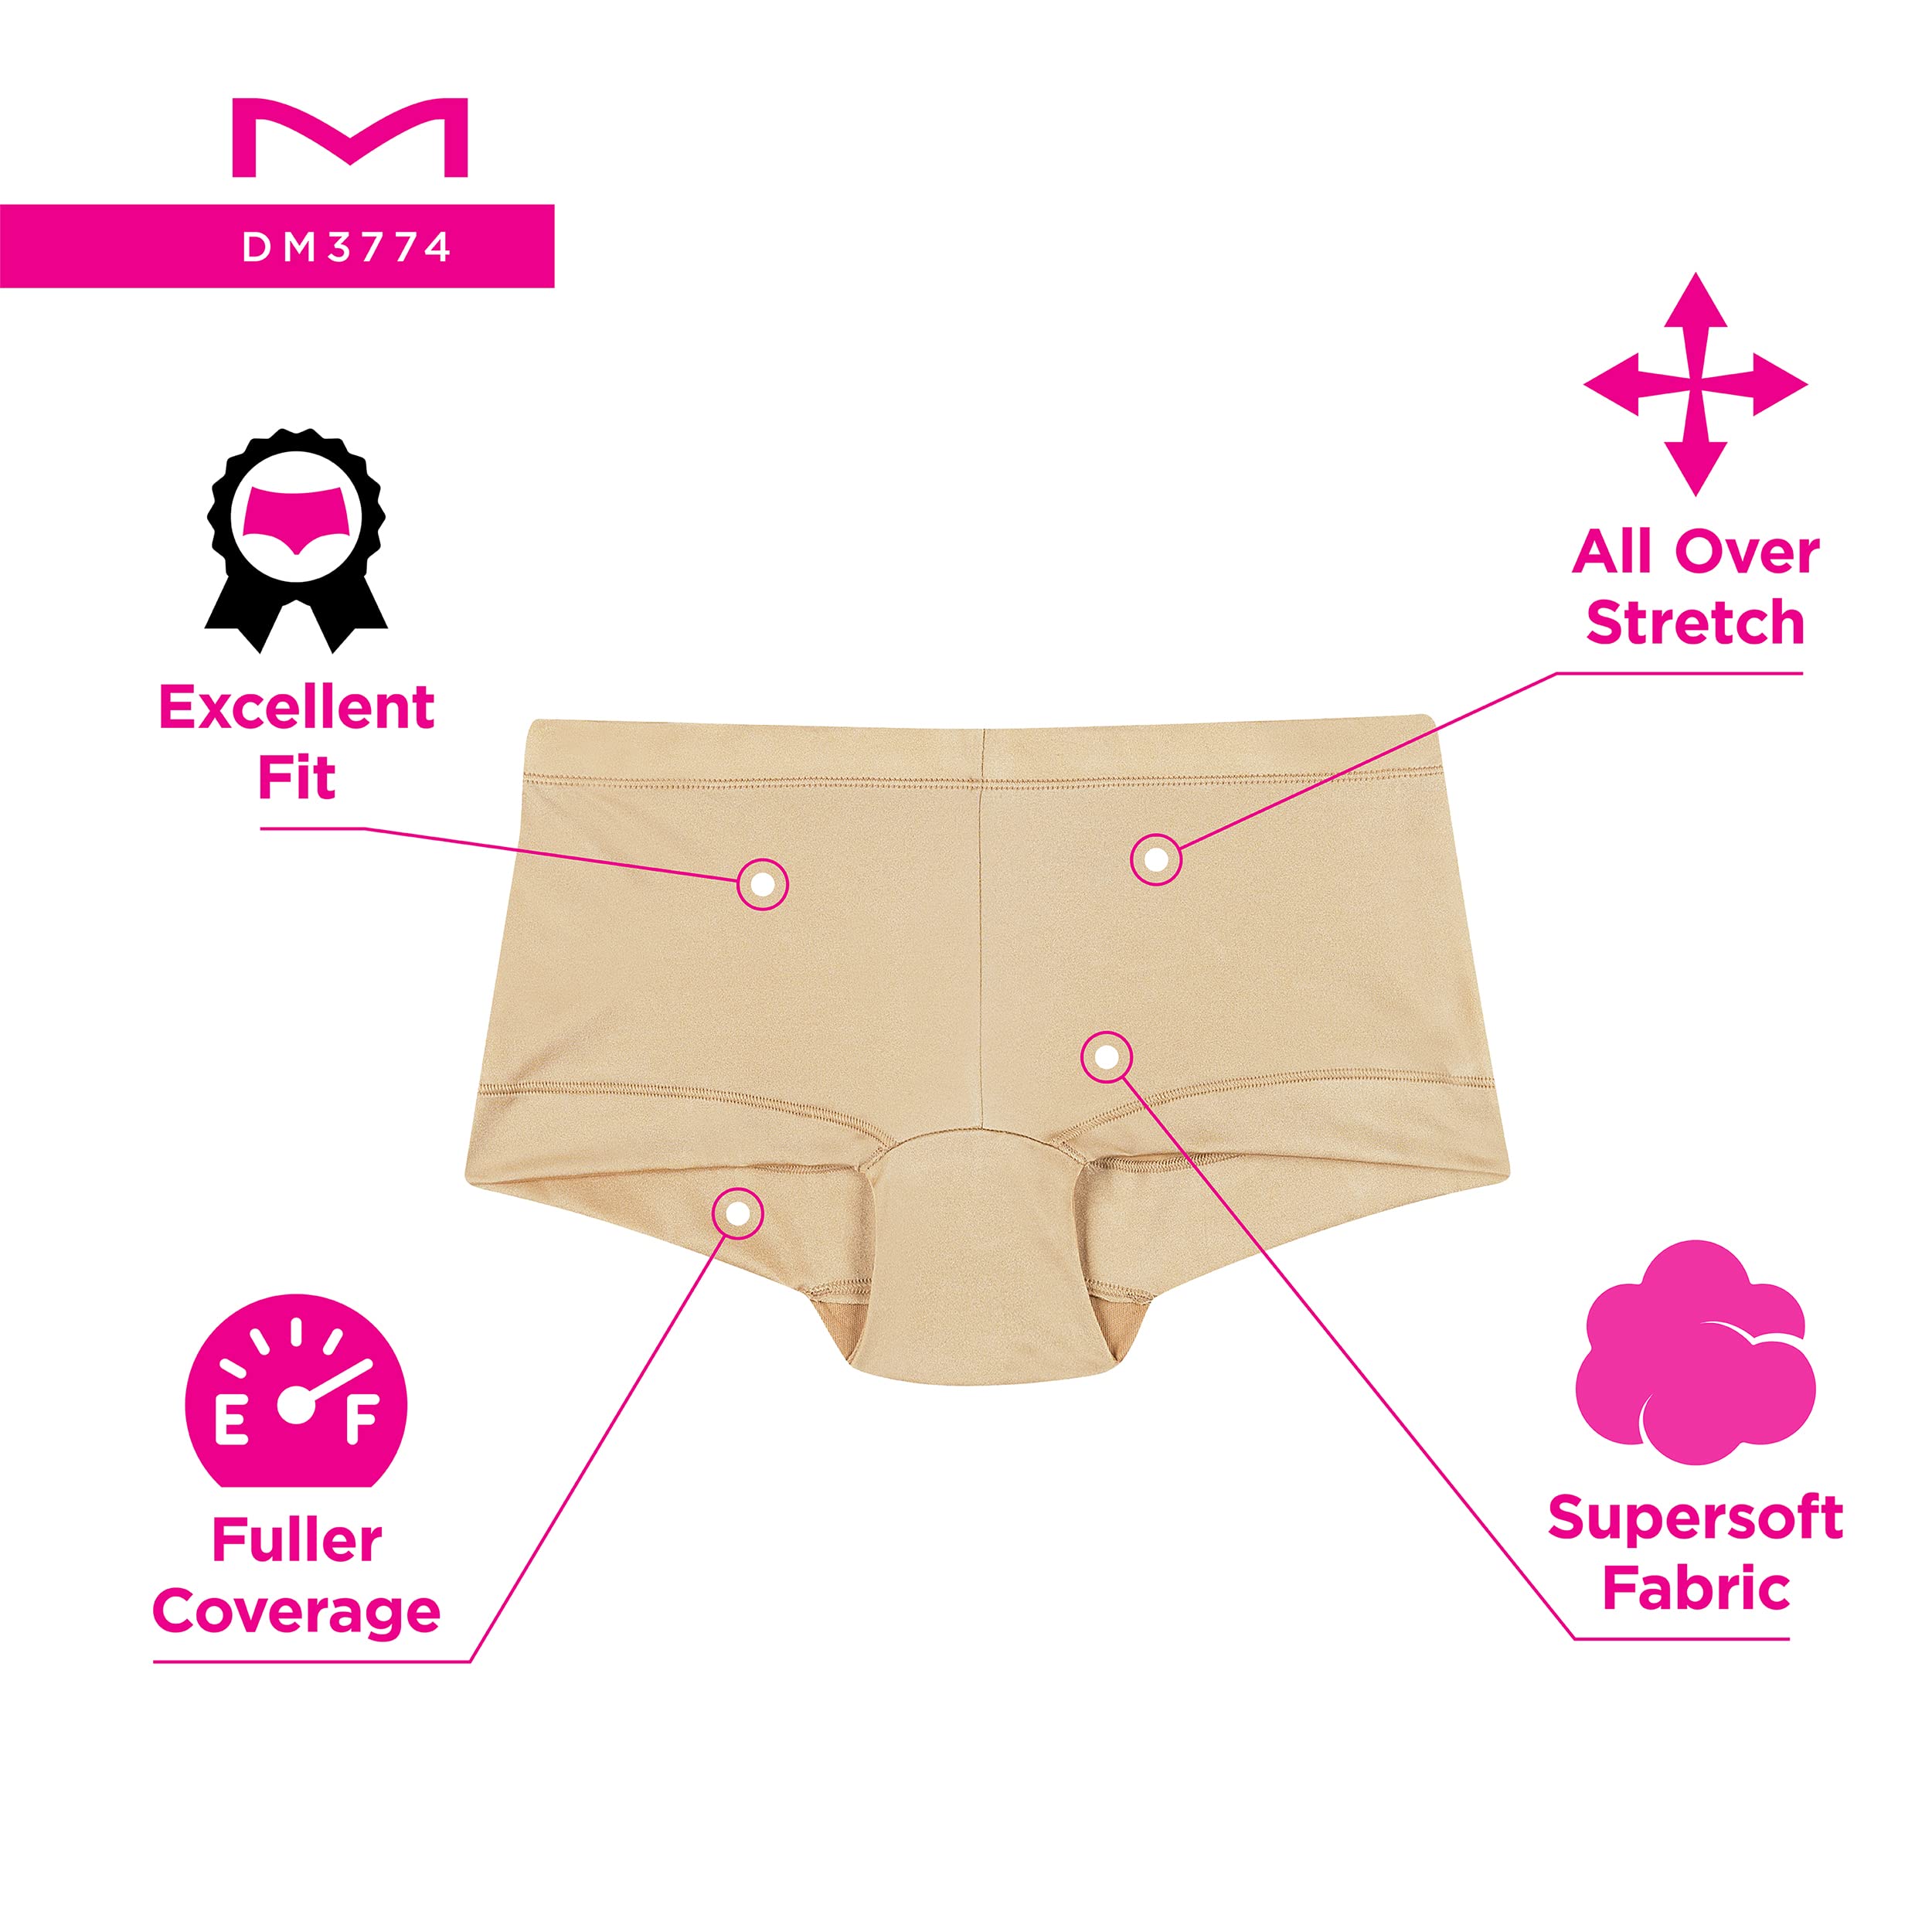 Maidenform Women's Microfiber Boyshort Underwear Pack, Full Coverage Boyshort Panties, 3-pack